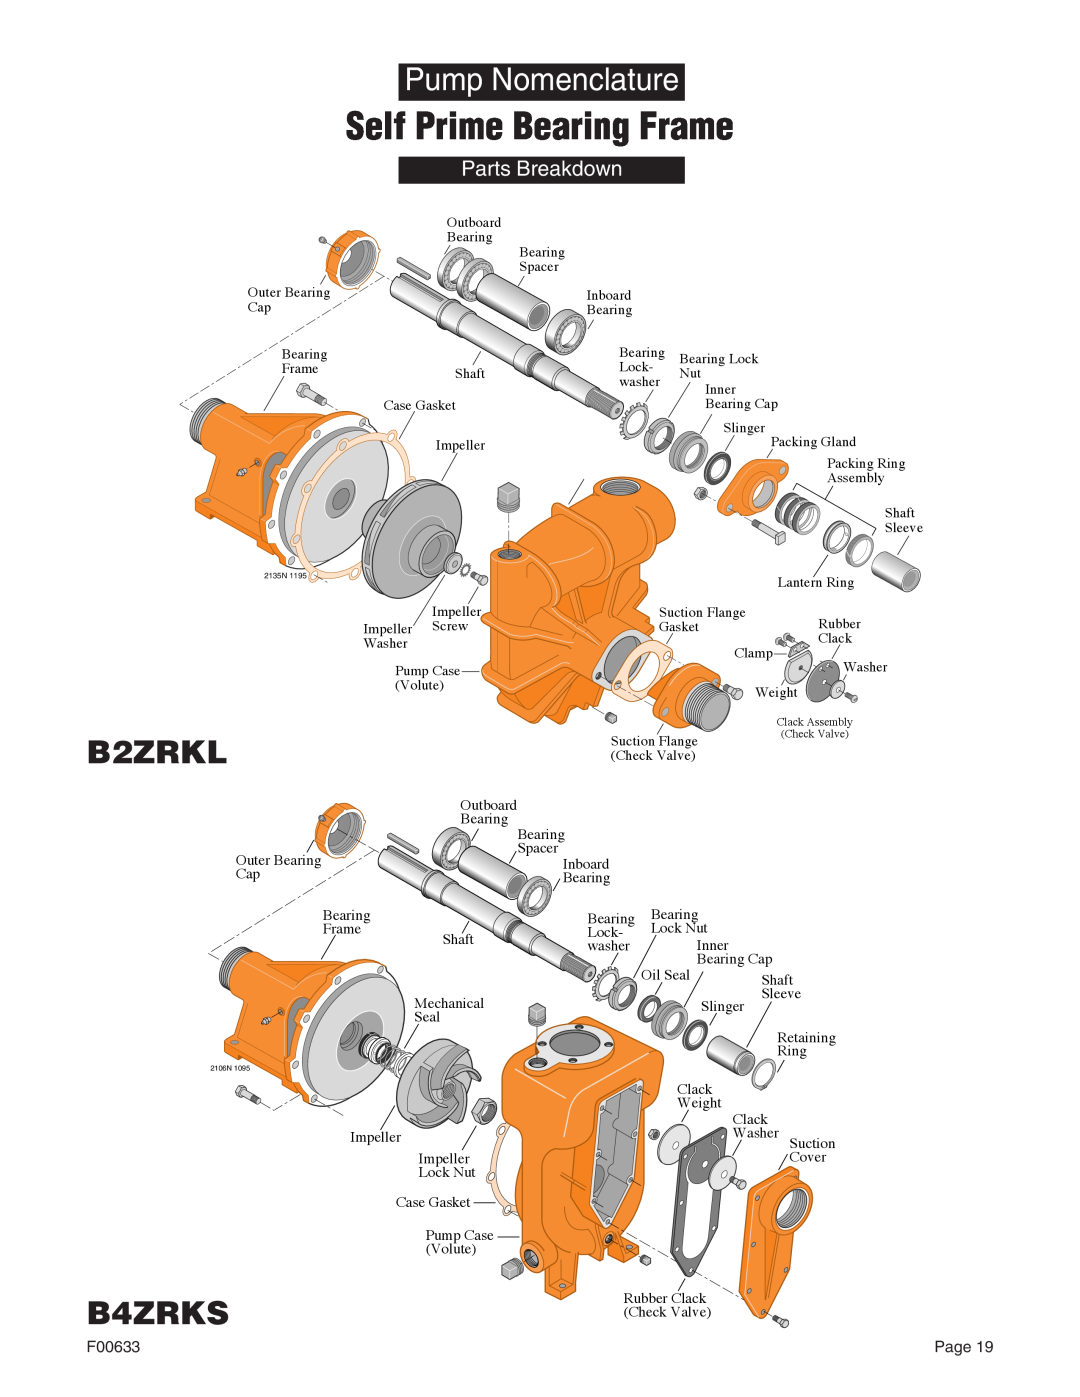 Berkley B2XRKS, B3TRKS owner manual Self Prime Bearing Frame, B2ZRKL, B4ZRKS, Parts Breakdown, Pump Nomenclature 